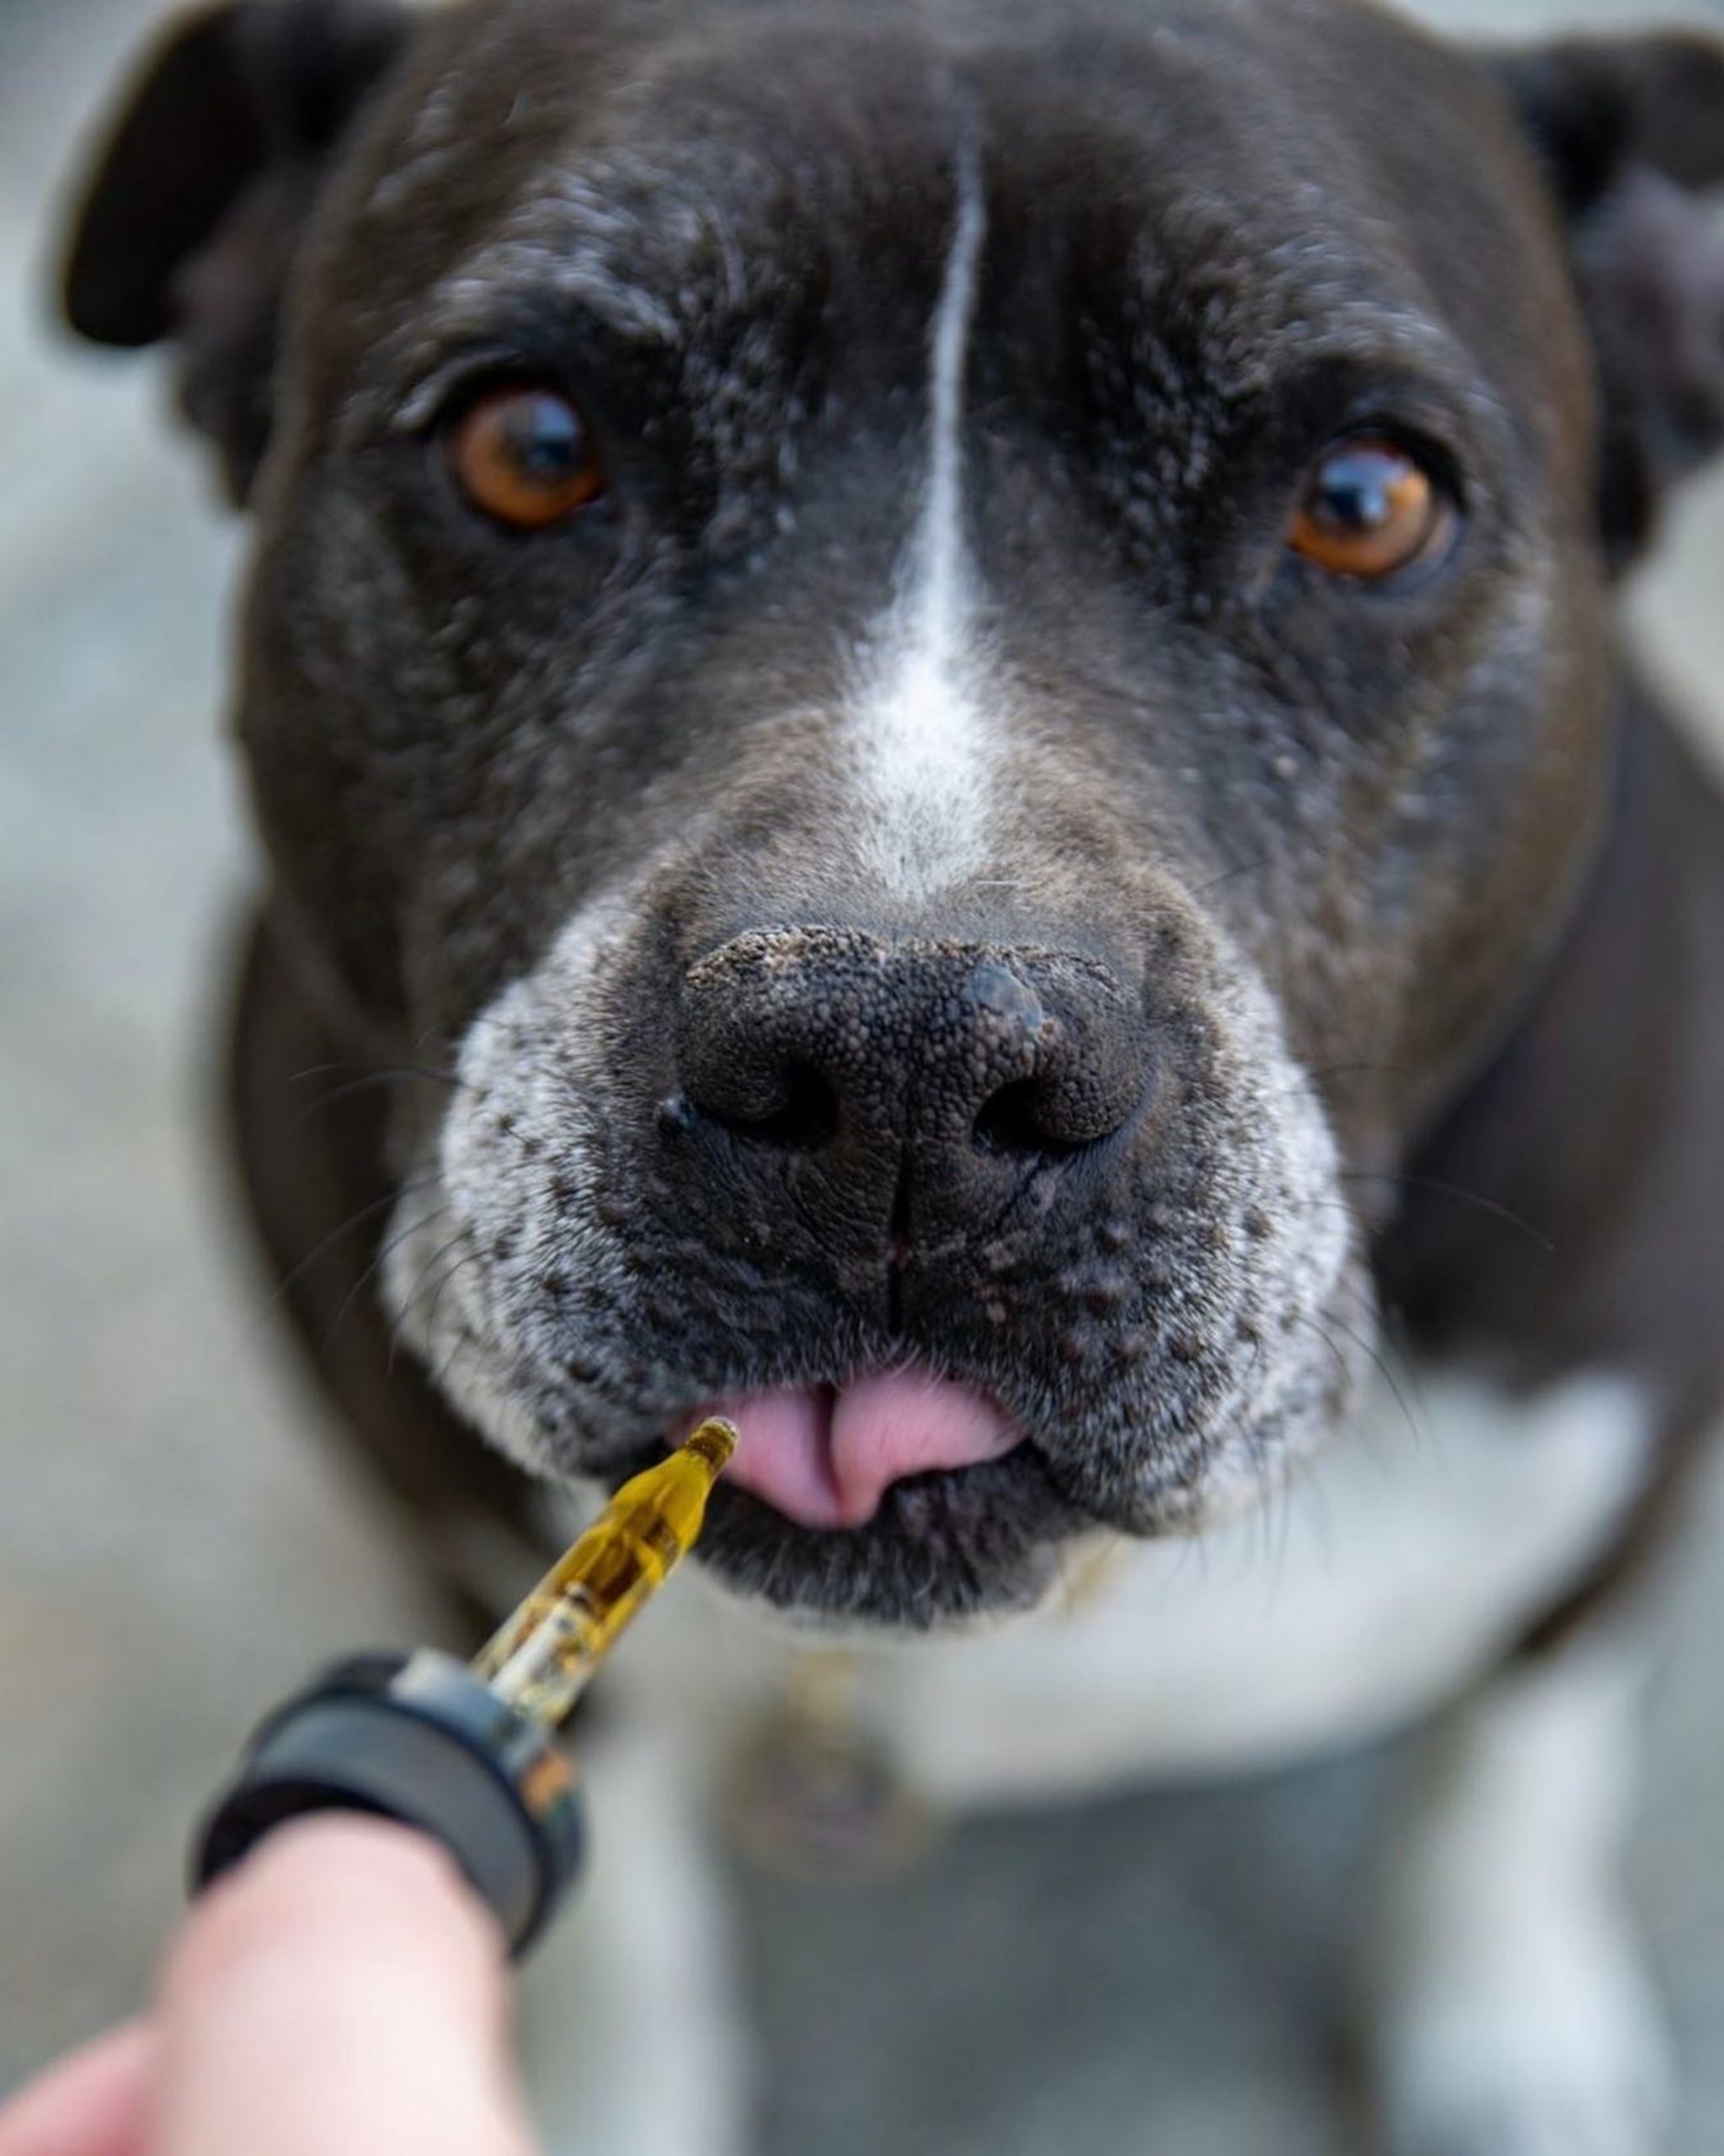 shelter dog gets medicine thanks to food donations